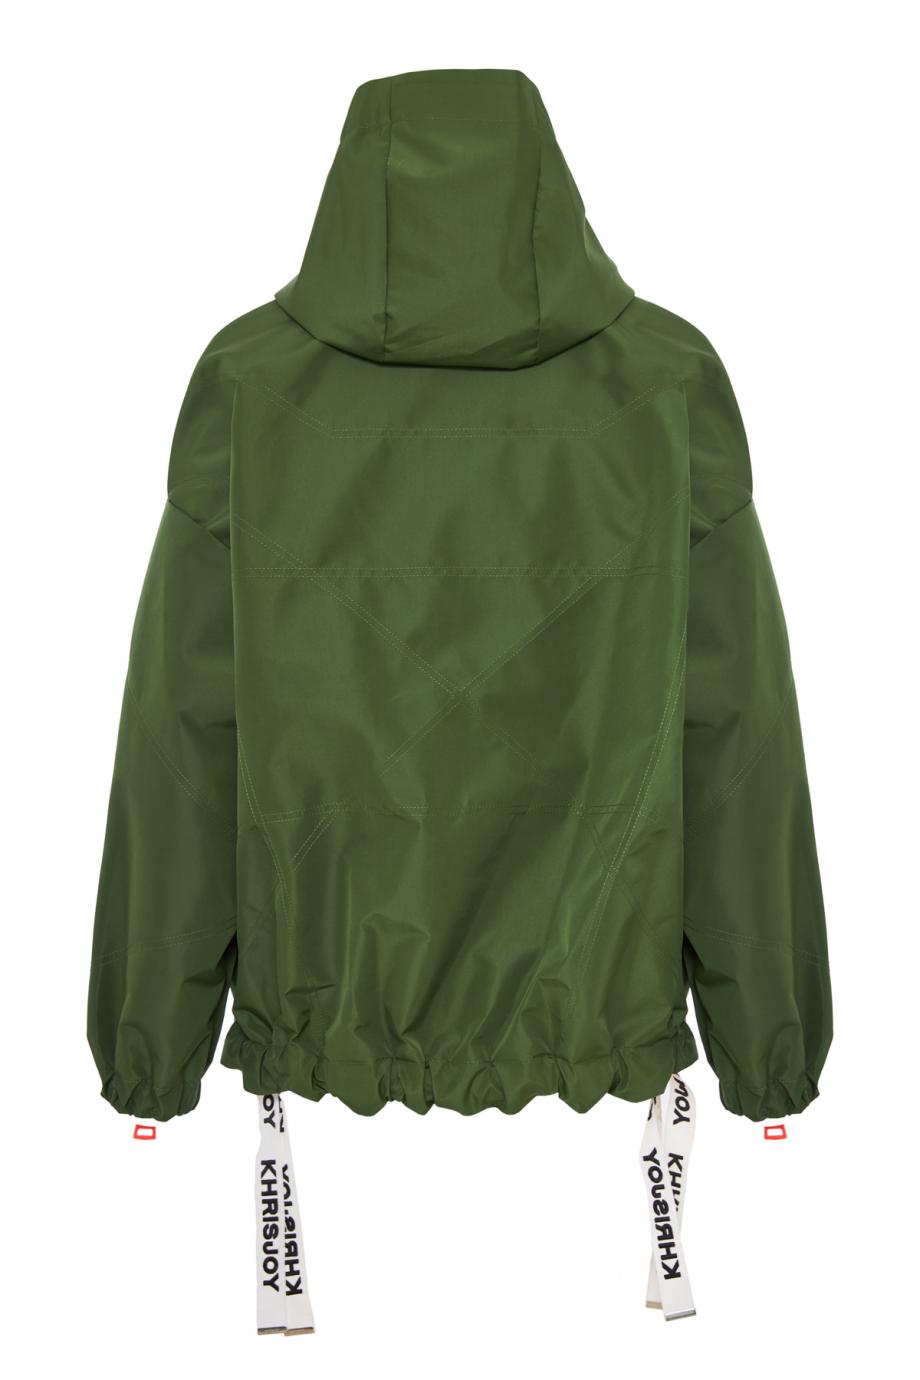 Khris windbreaker jacket in olive army